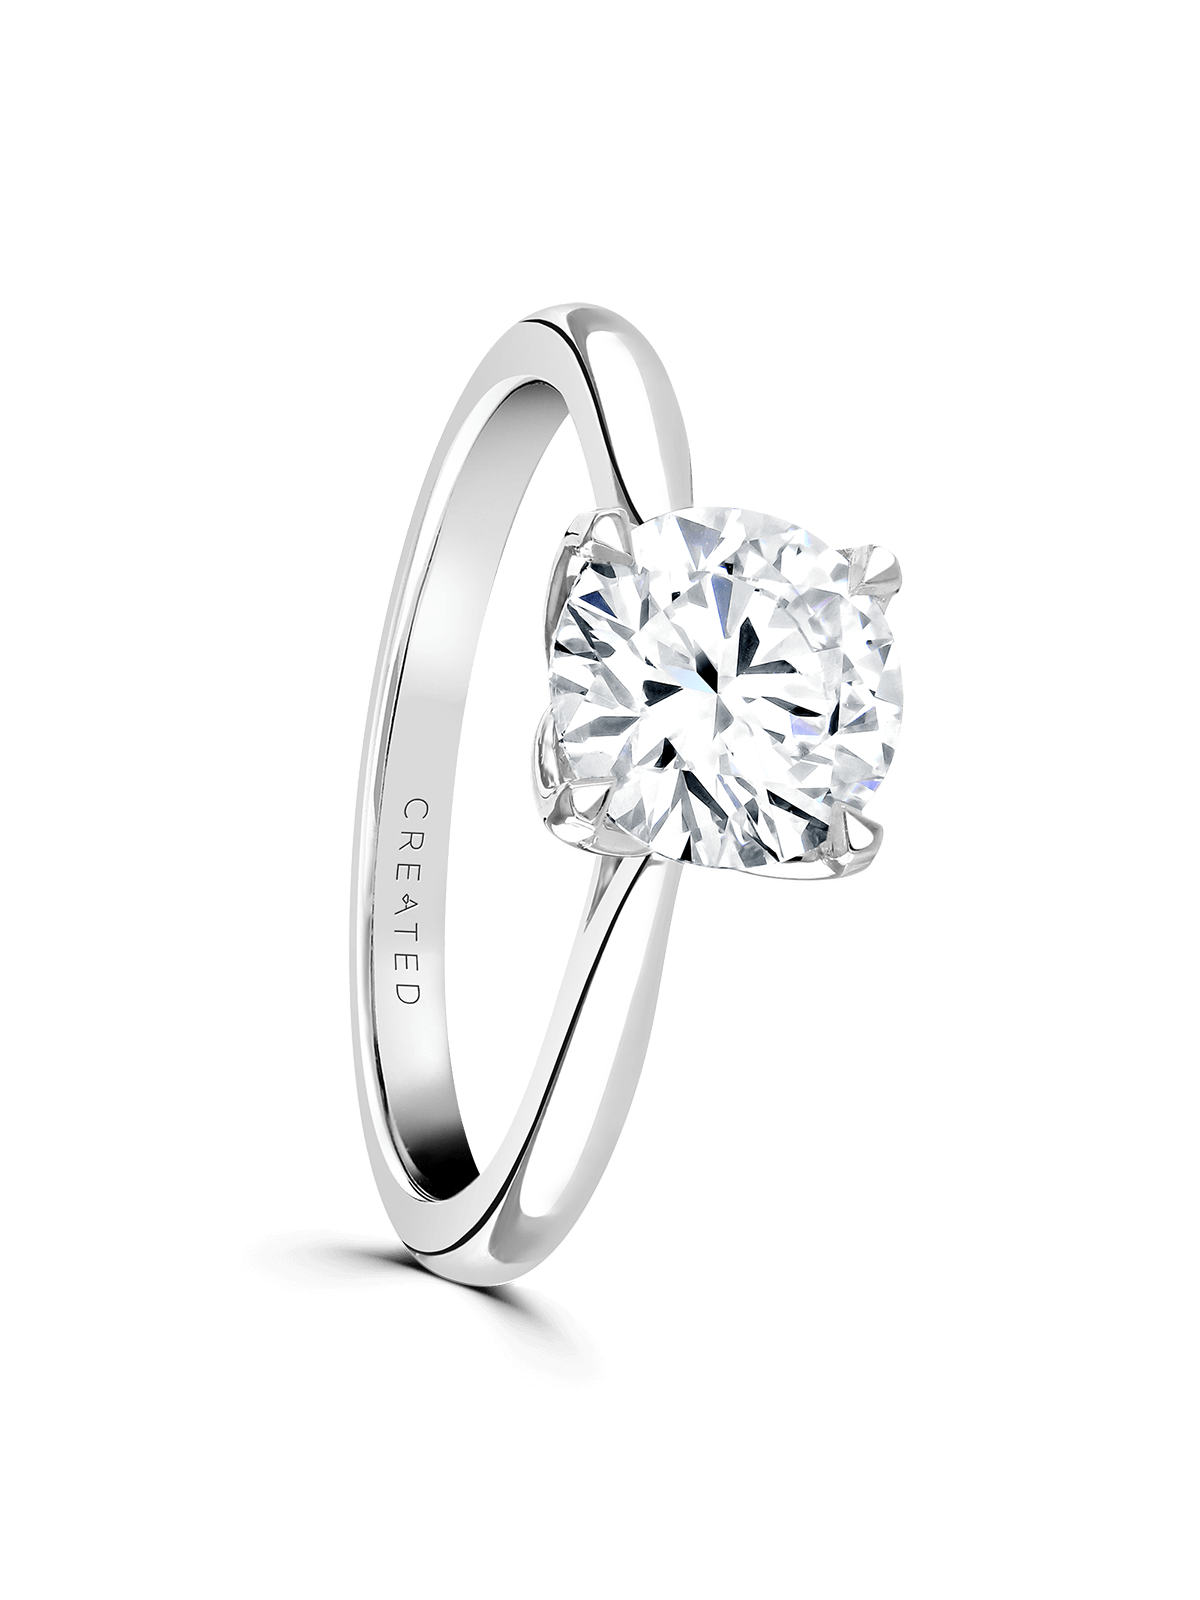 "Magnolia" Approx 1.50ct Brilliant Cut Lab Grown Diamond Solitaire Engagement Ring in Platinum